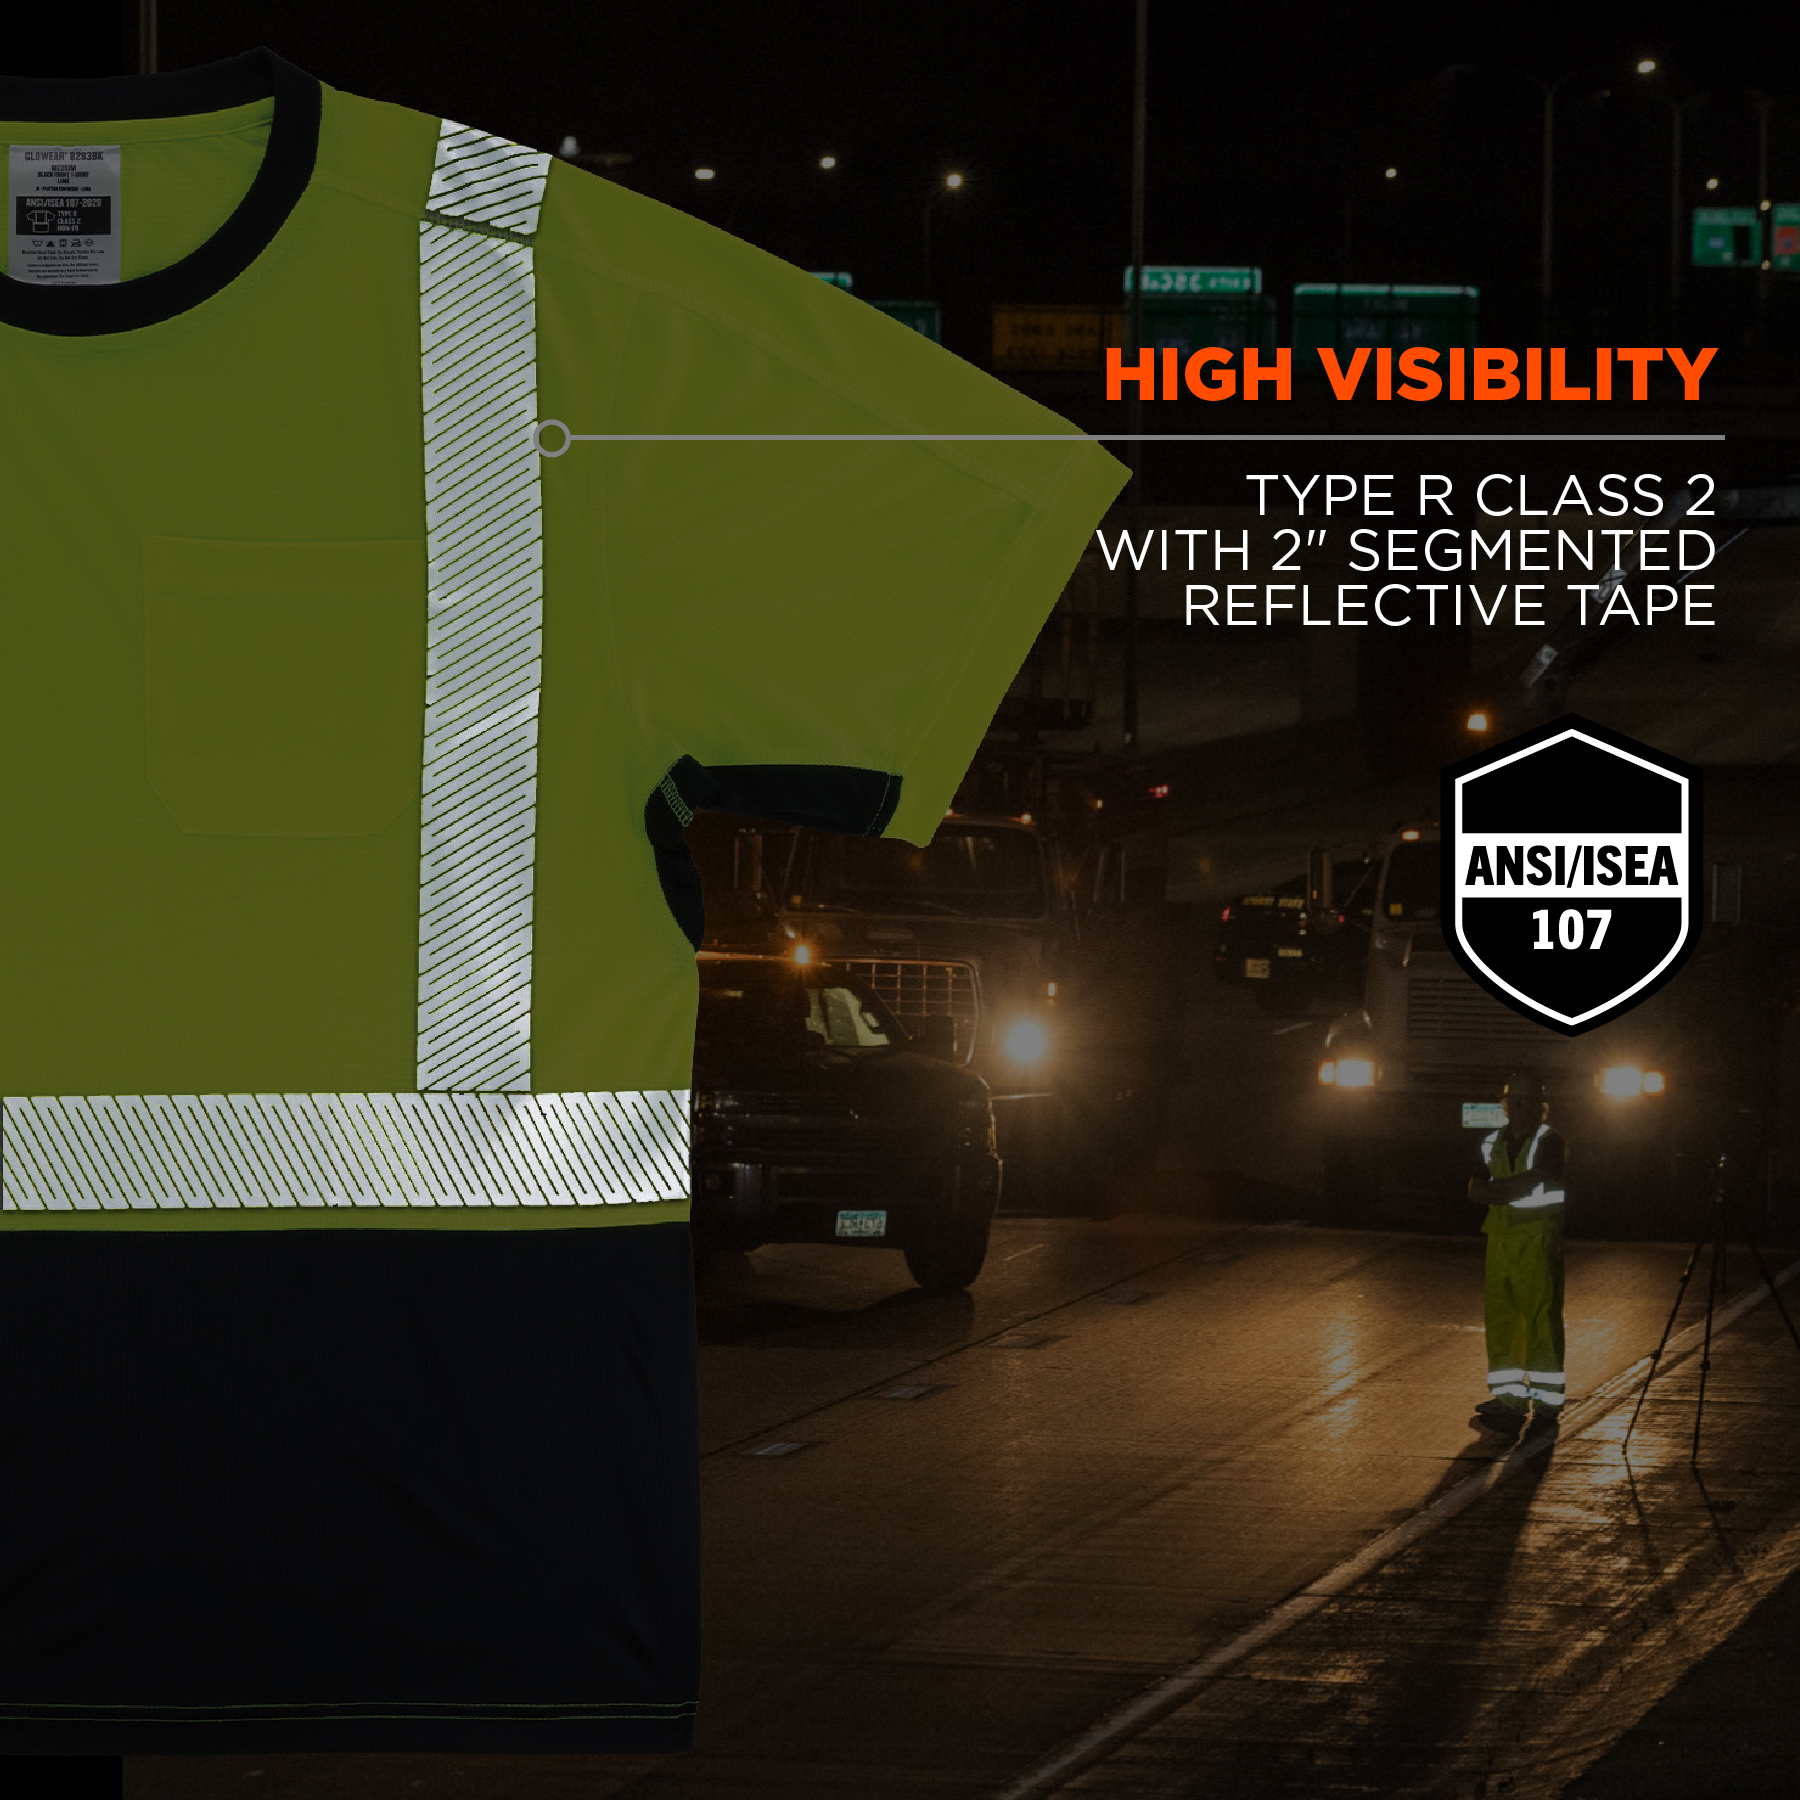 Ergodyne GloWear 8289 ANSI High Visibility Orange Reflective T-Shirt 4XL 